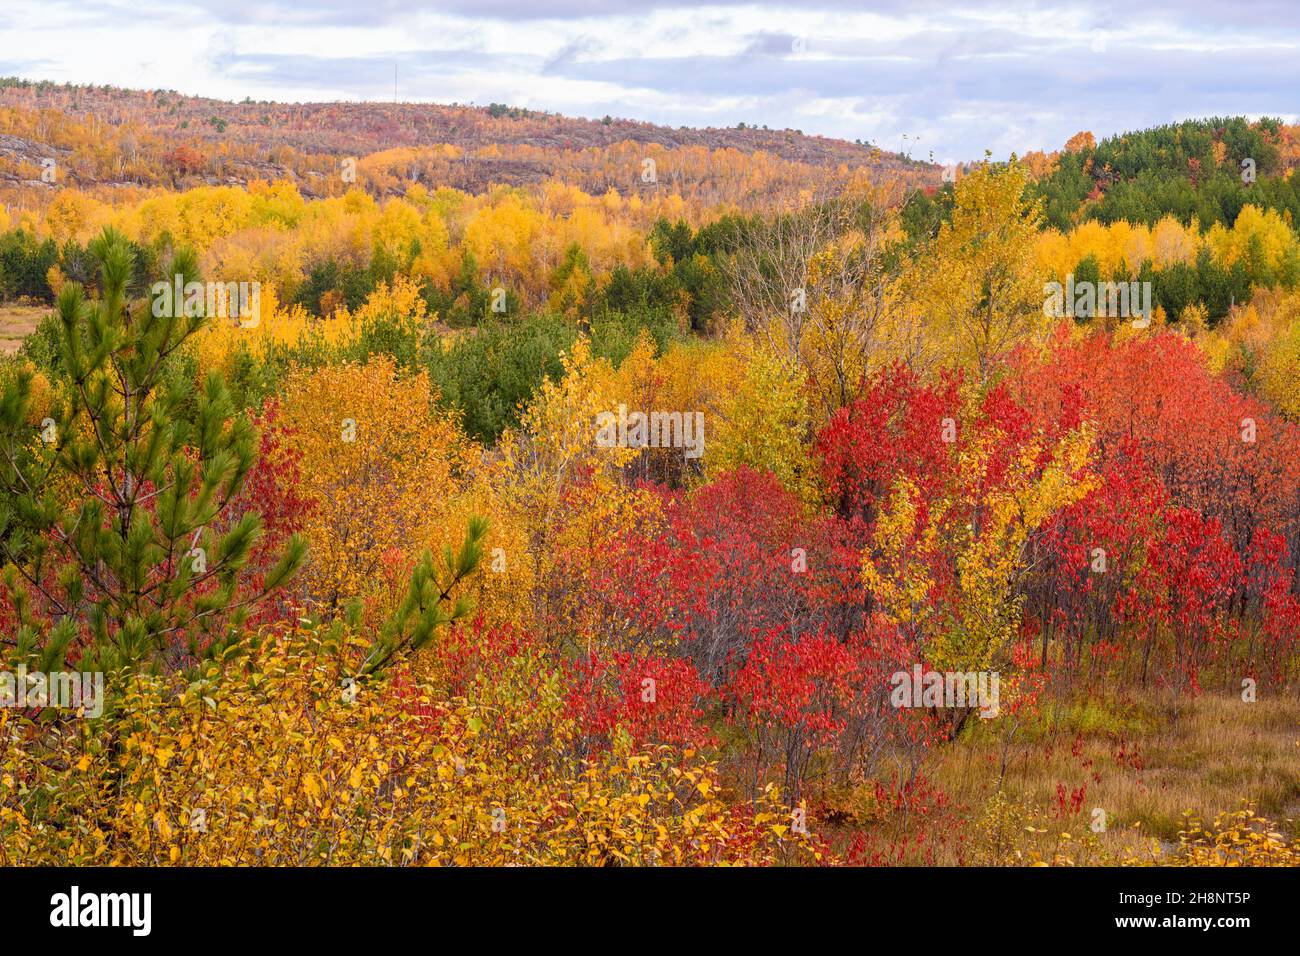 Biodiversity in the Sudbury Basin- Autumn trees and pines, Greater Sudbury, Ontario, Canada Stock Photo